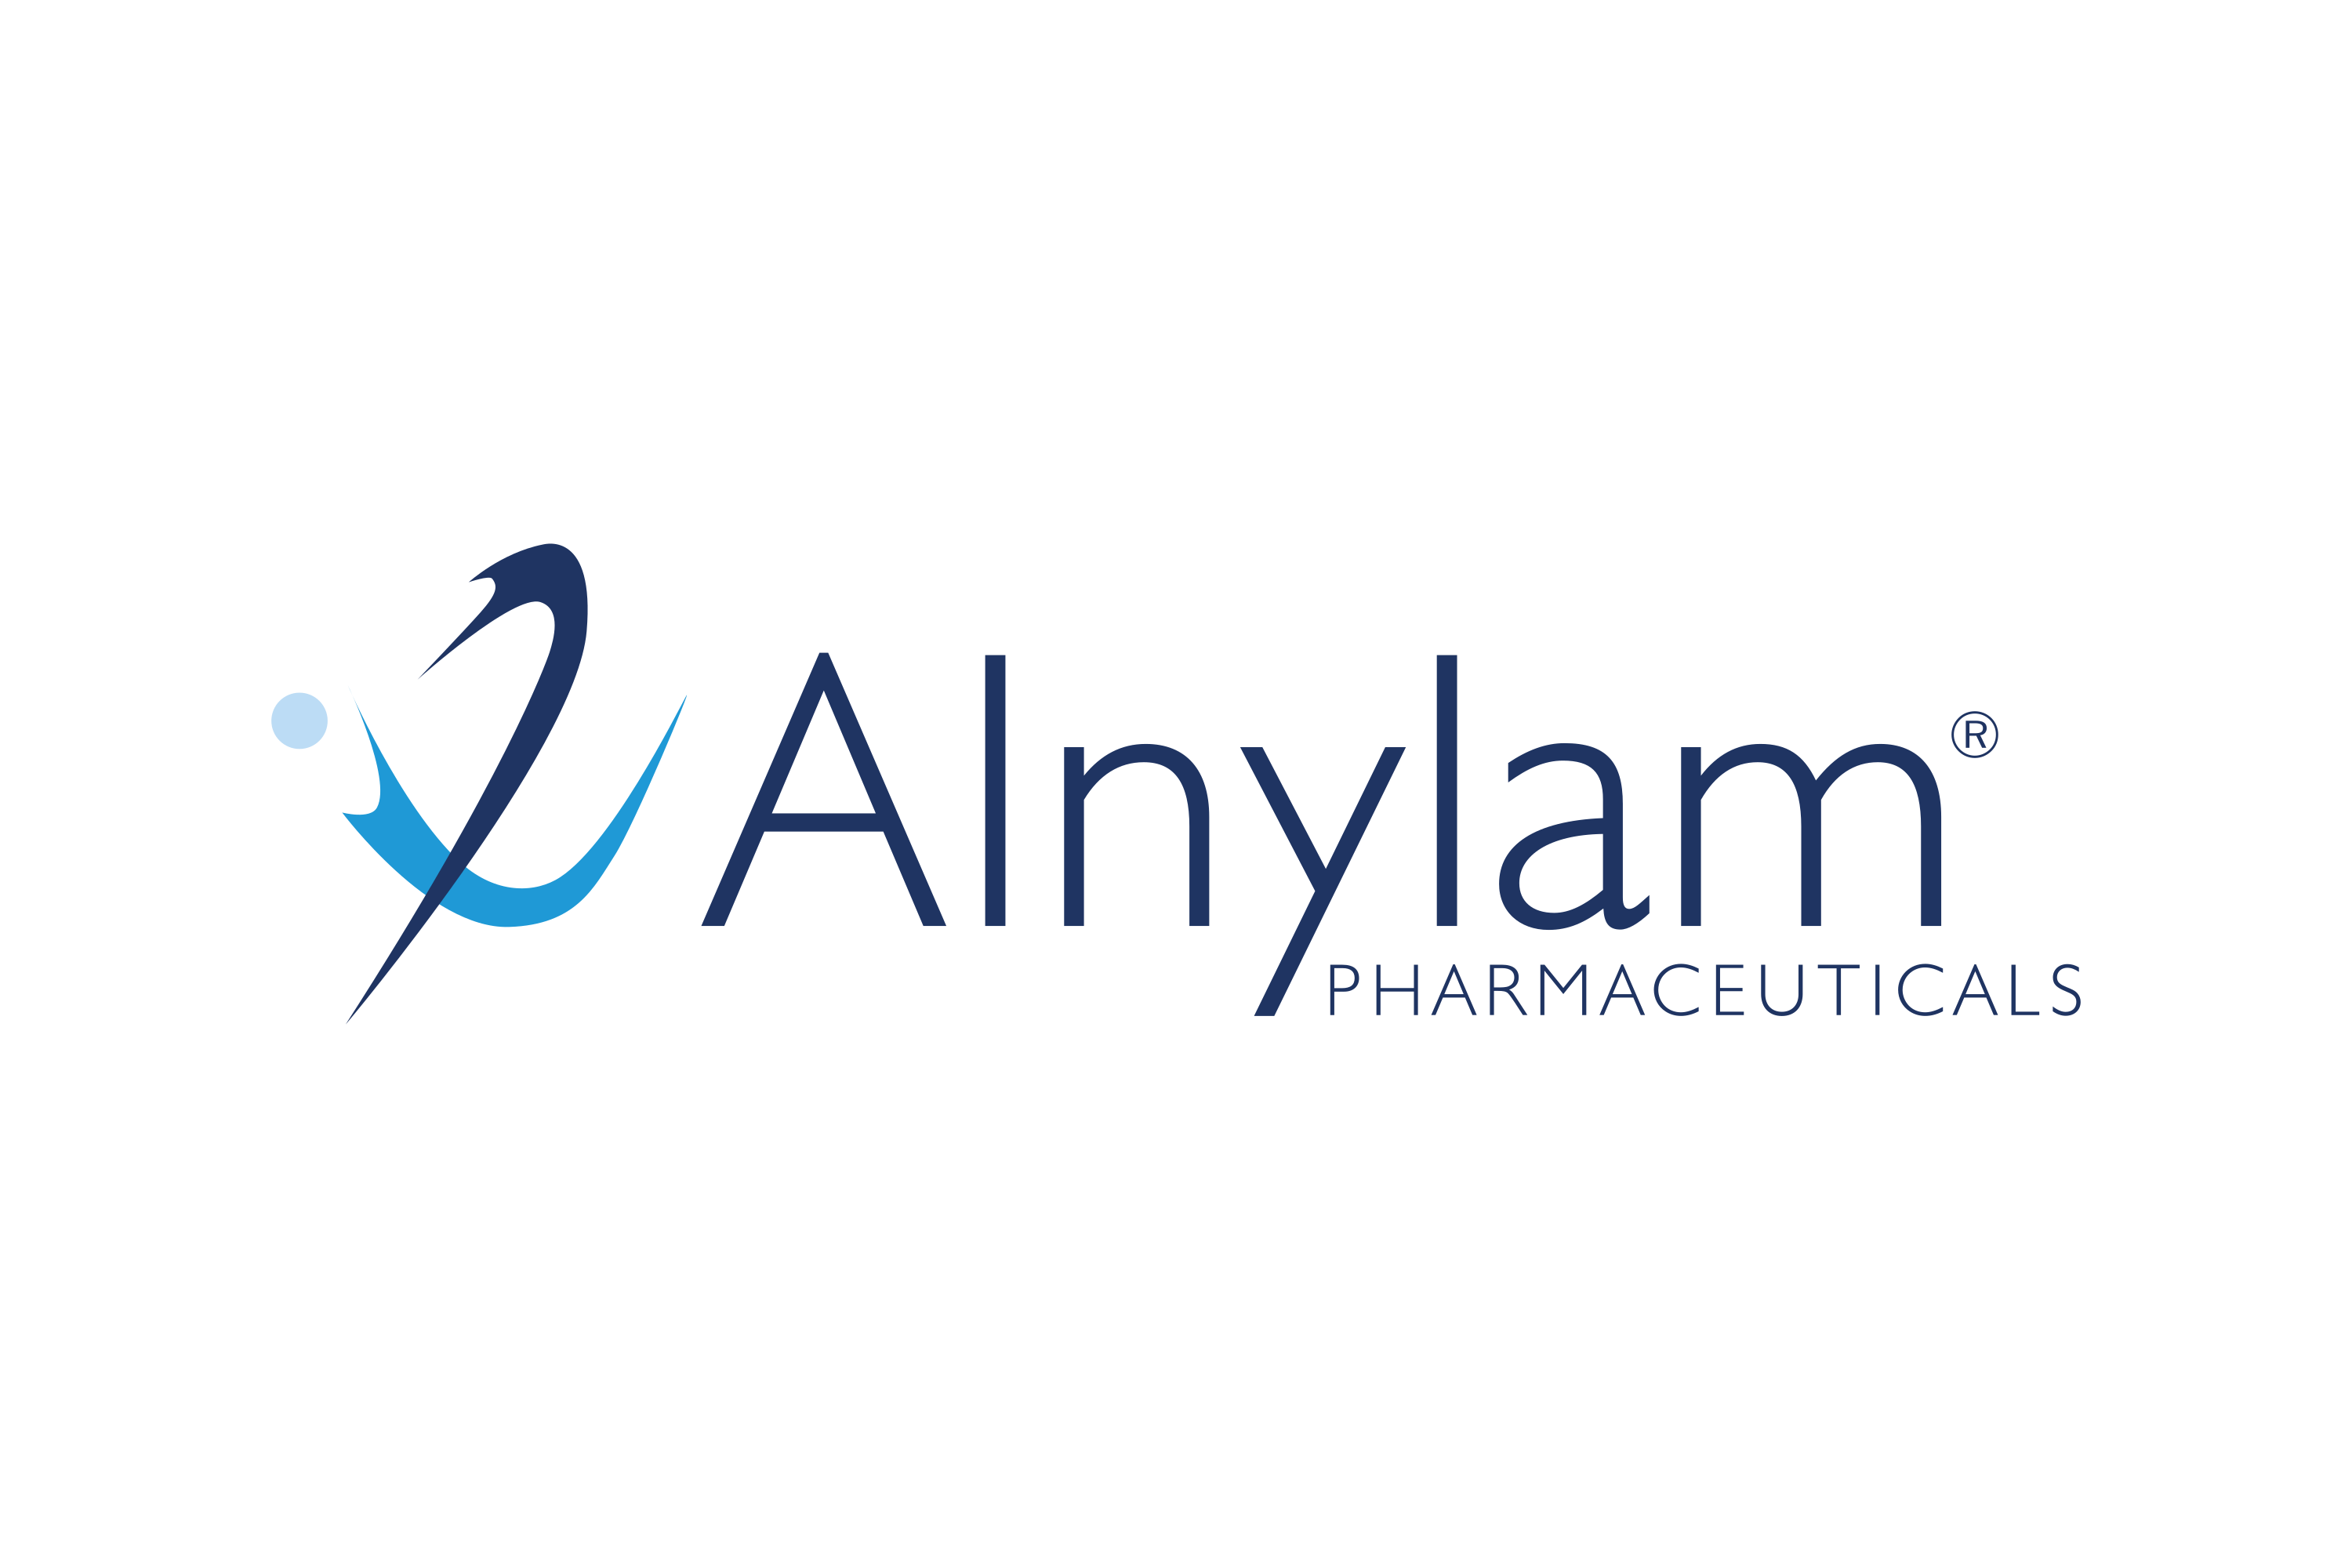 Alnylam Pharmaceuticals